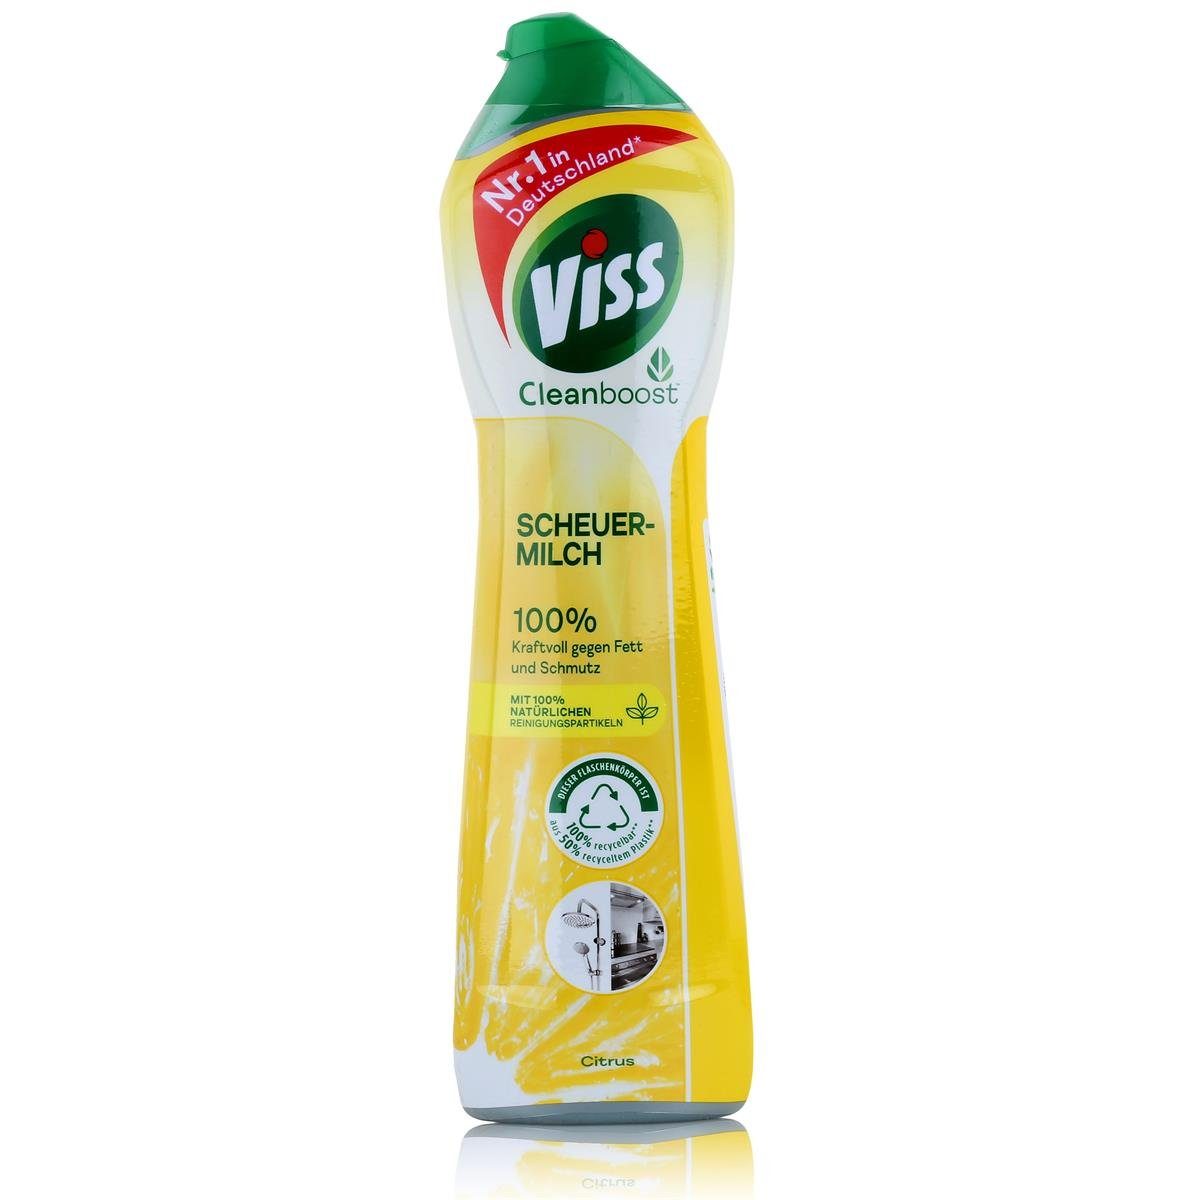 Viss Viss Cleanboost Scheuer-Milch Citrus 500ml - Gegen Fett und Schmutz (1 Універсальний засіб для чищення